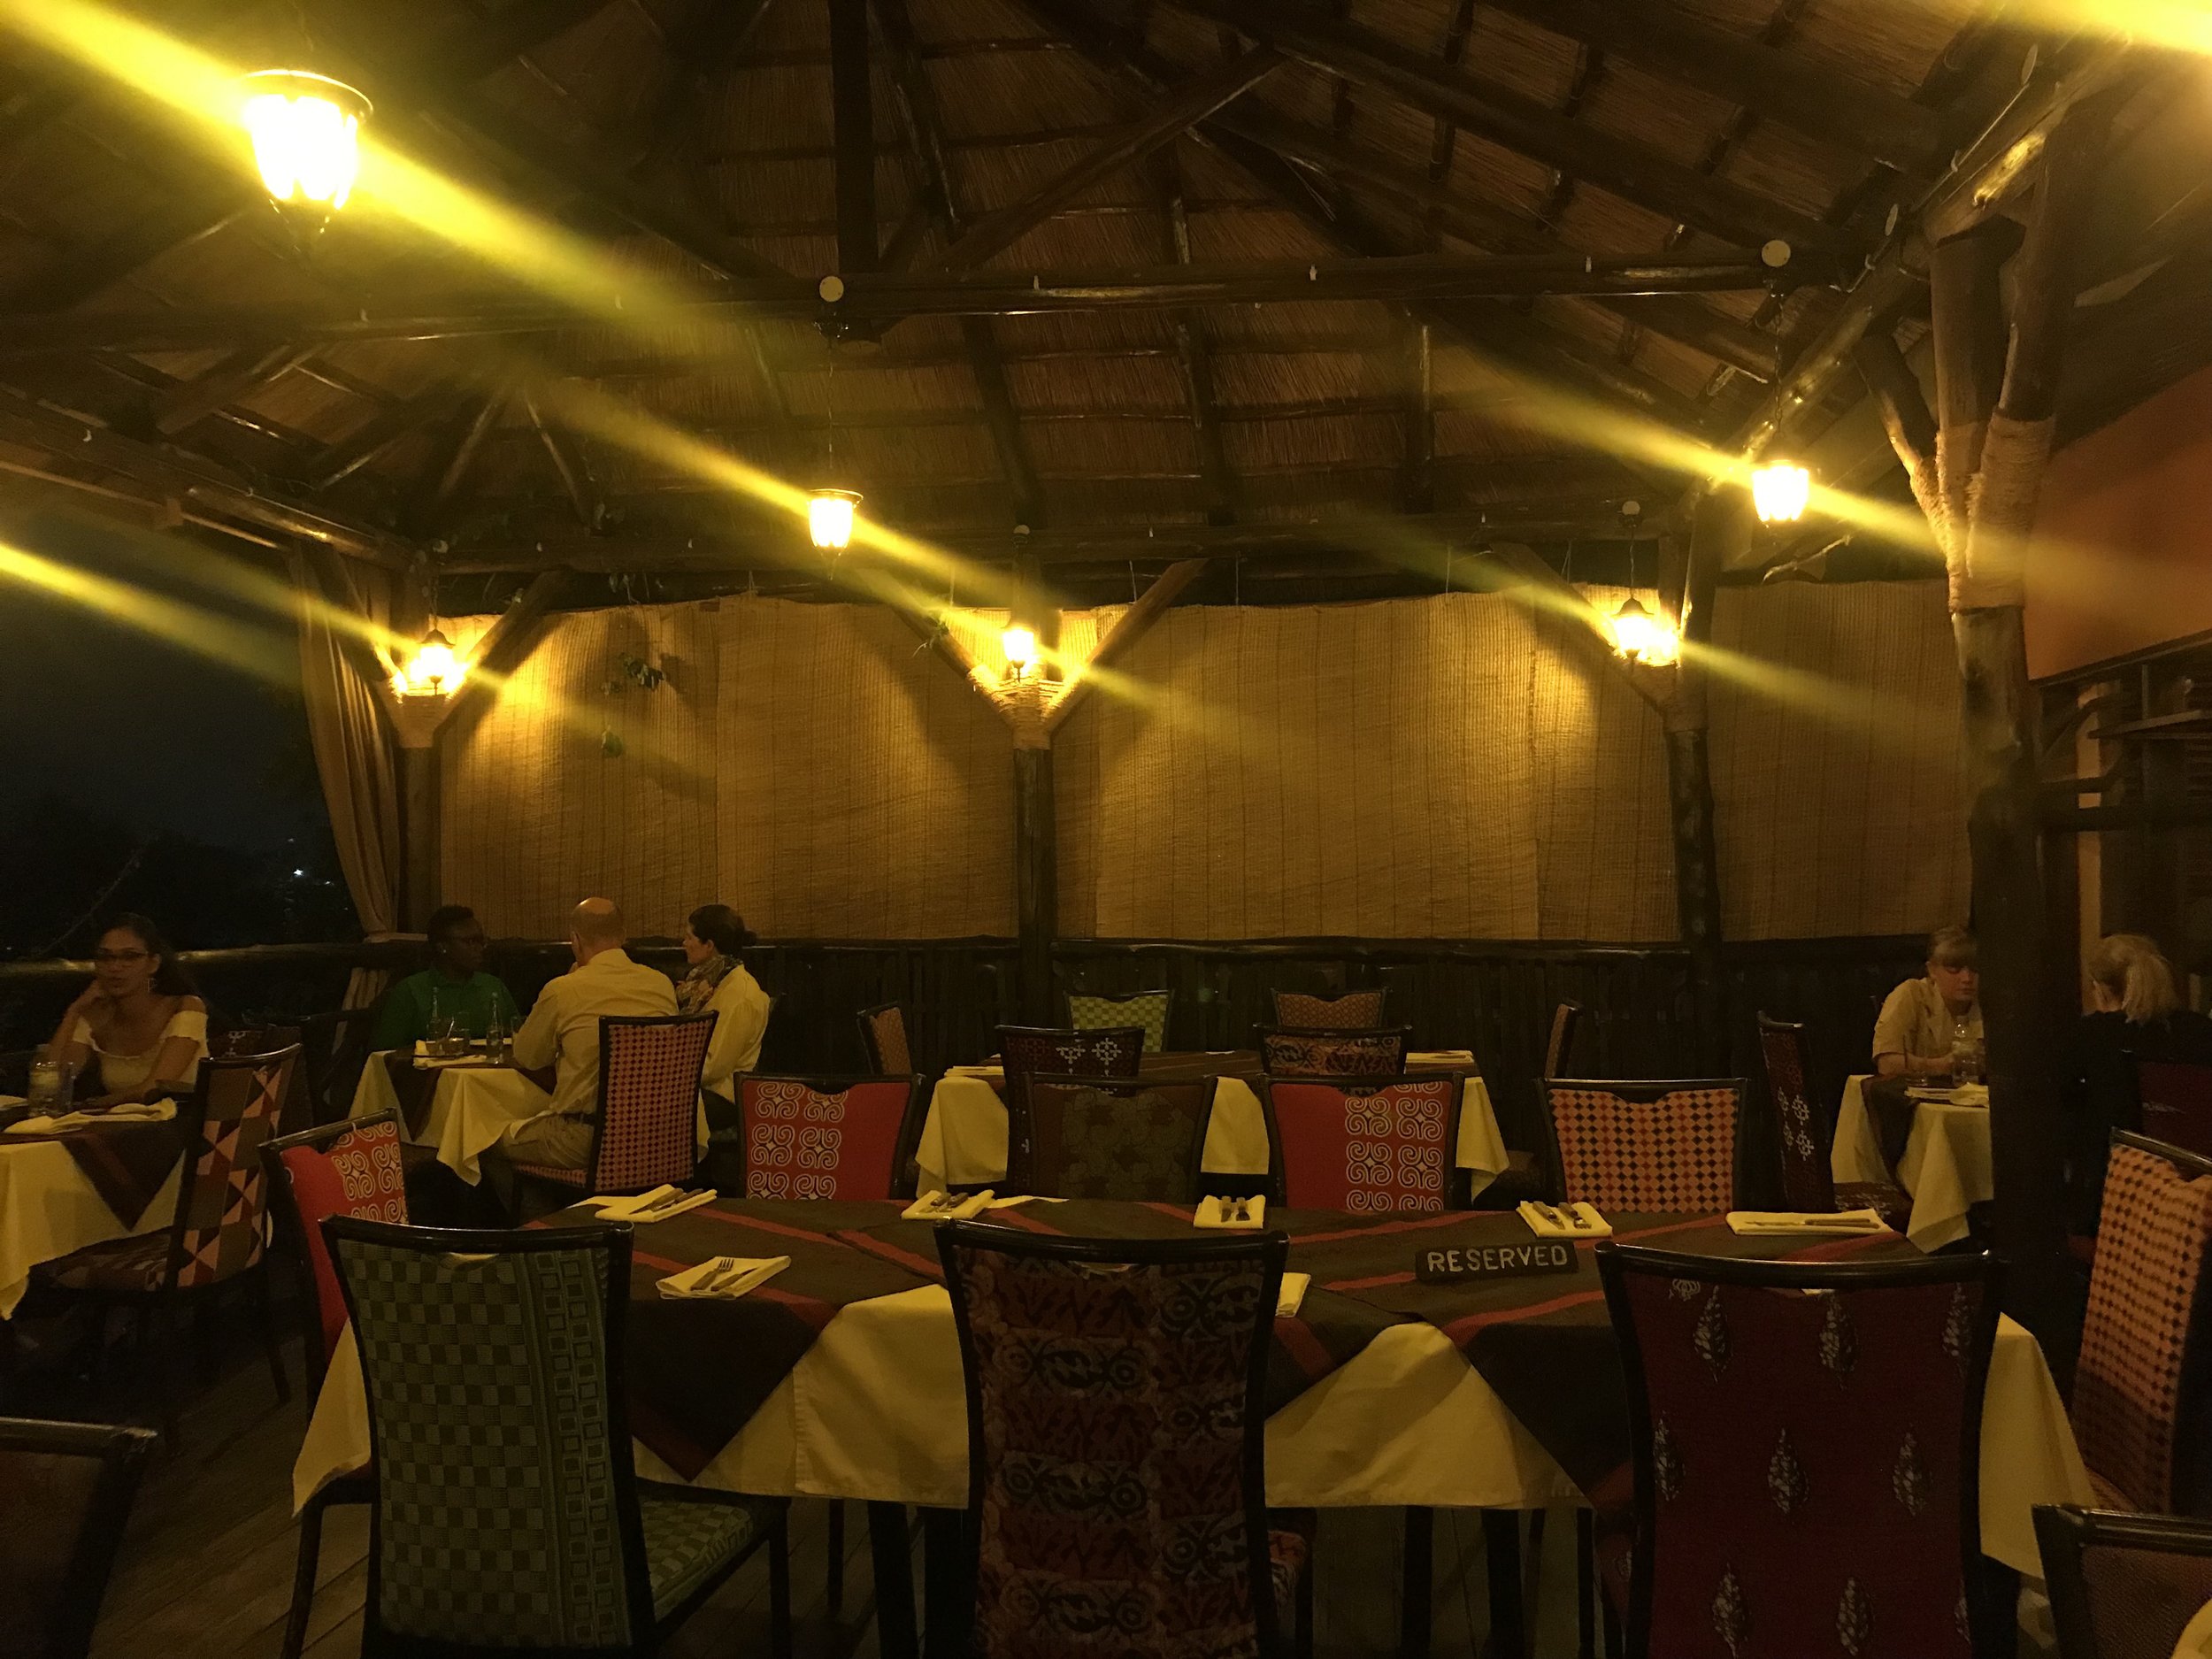 IMG_6236 2VickieRemoe-travel-kigali-rwanda-review-kwibohora25-hotels-africa.JPG